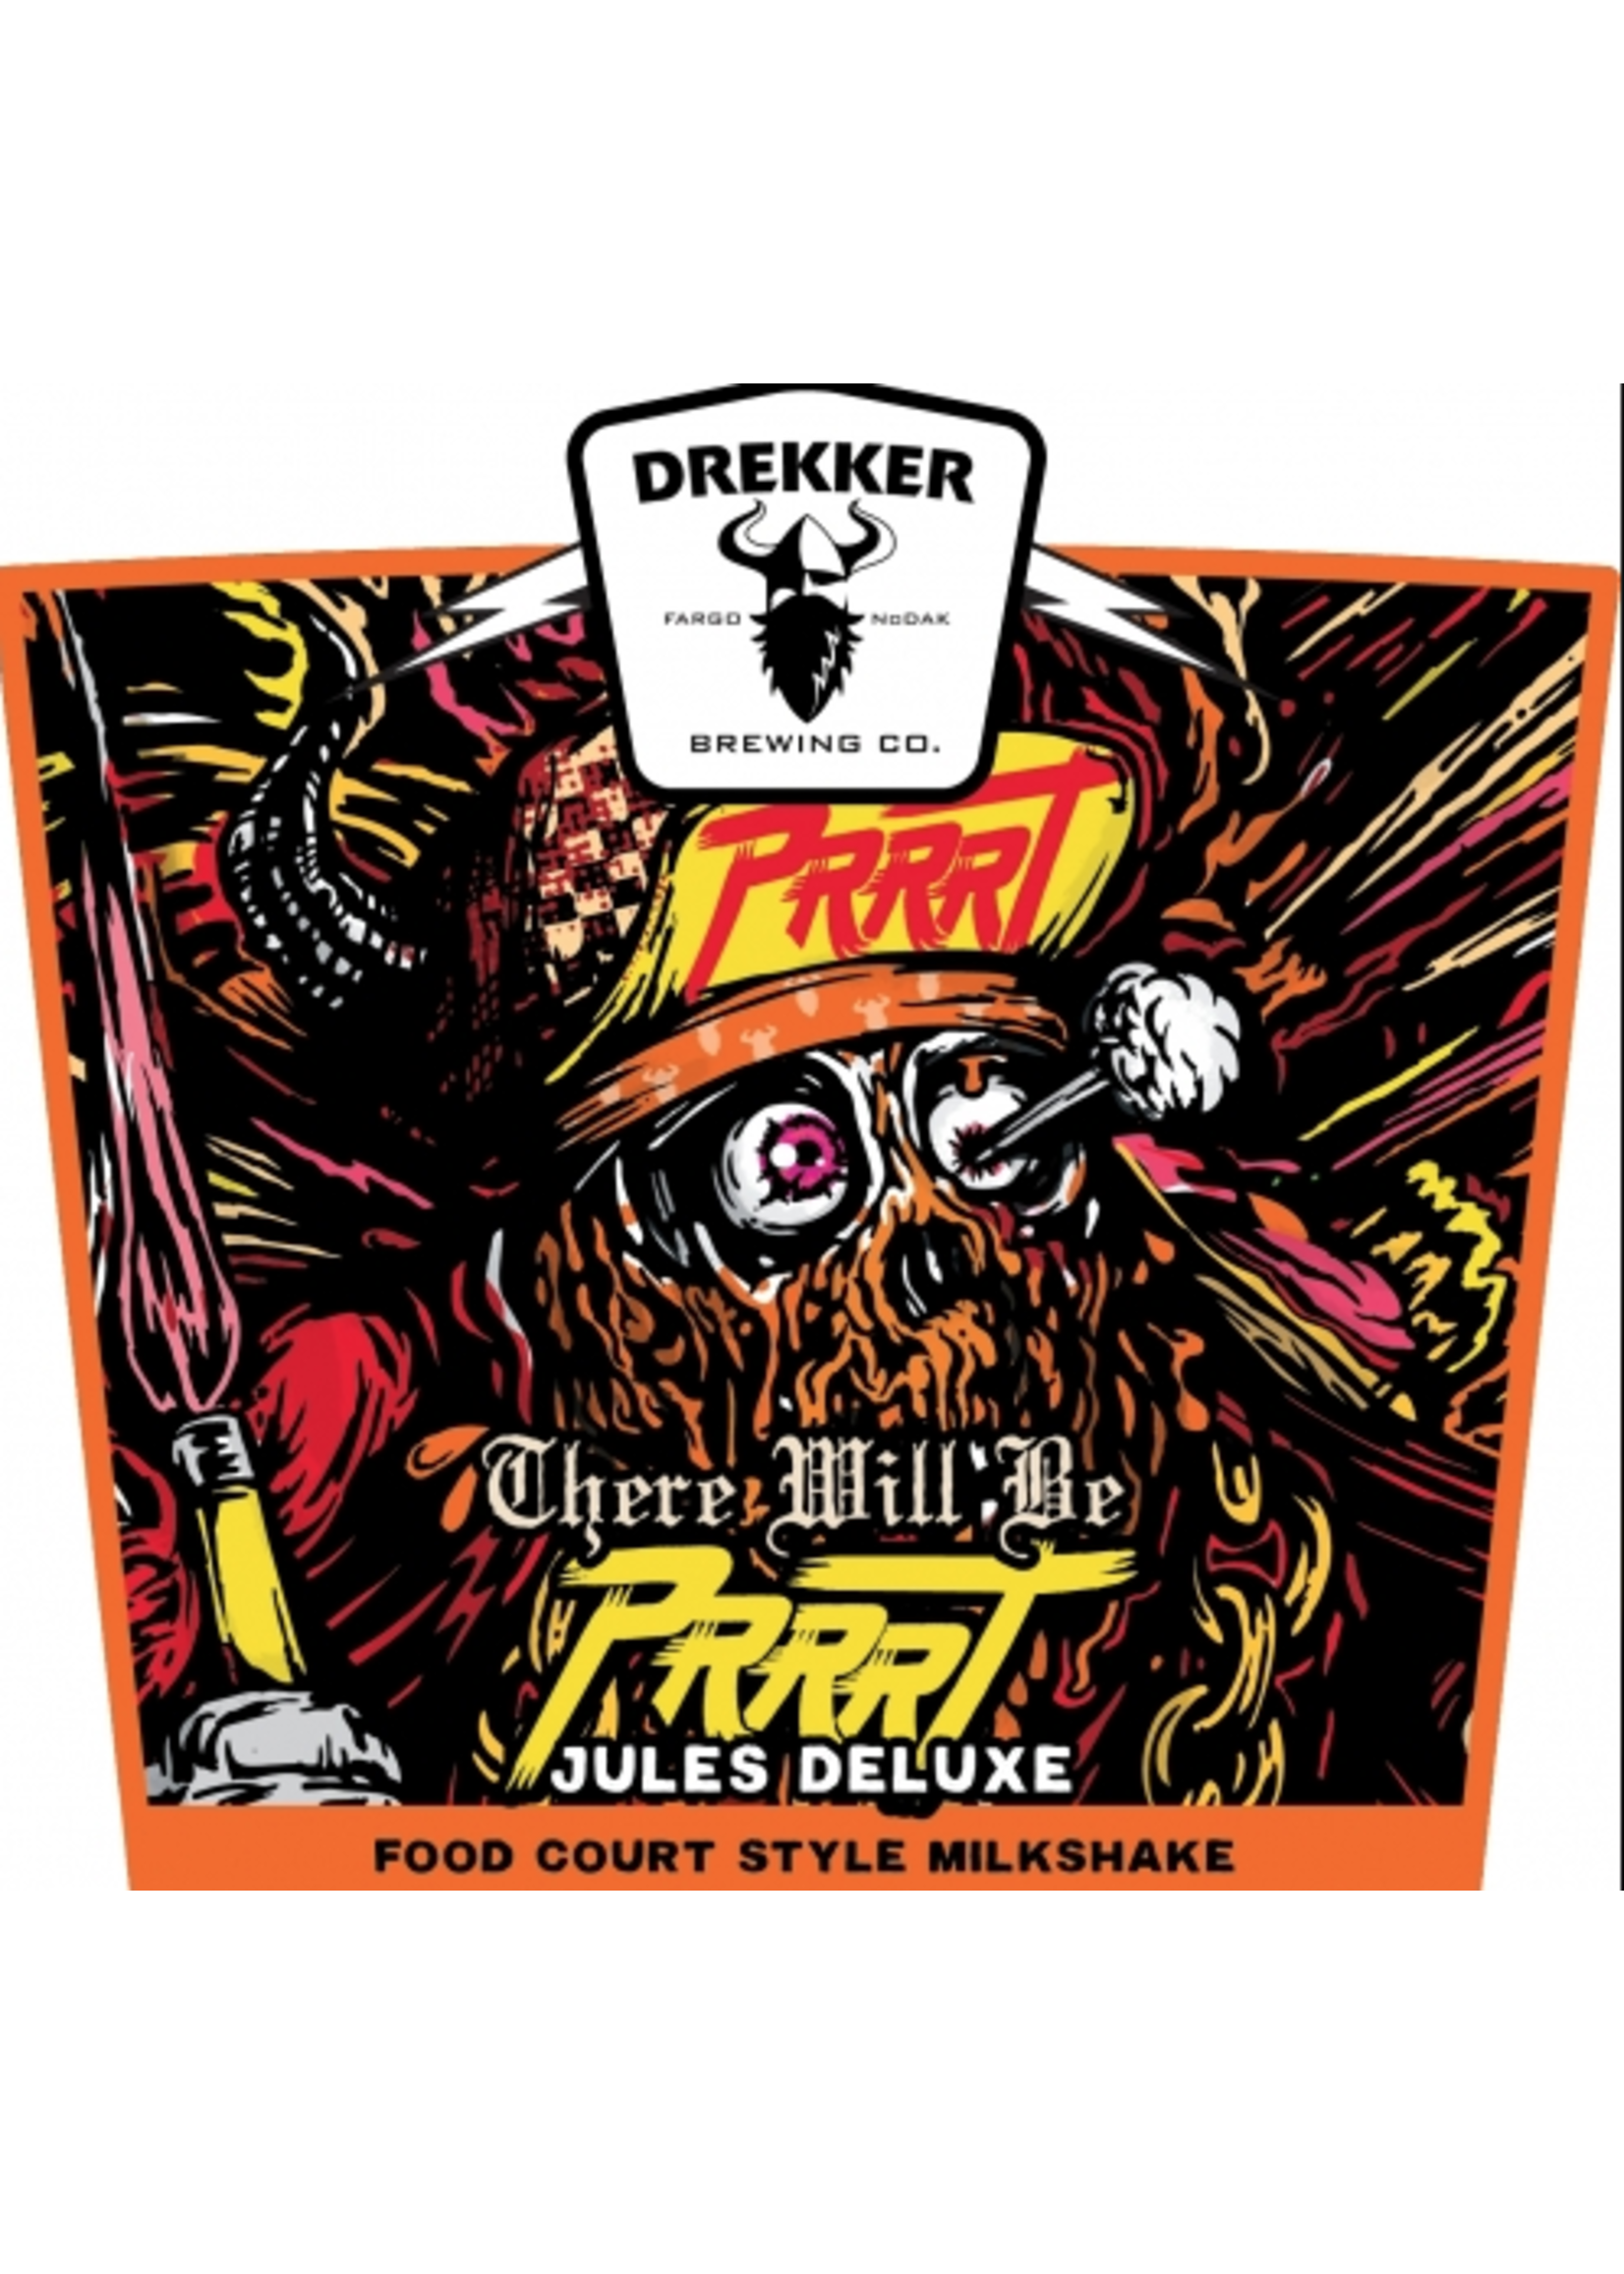 Drekker Brewing Co. Beer 4Pack - Drekker Brewing Co. - There Will Be Prrrt - Jules Deluxe